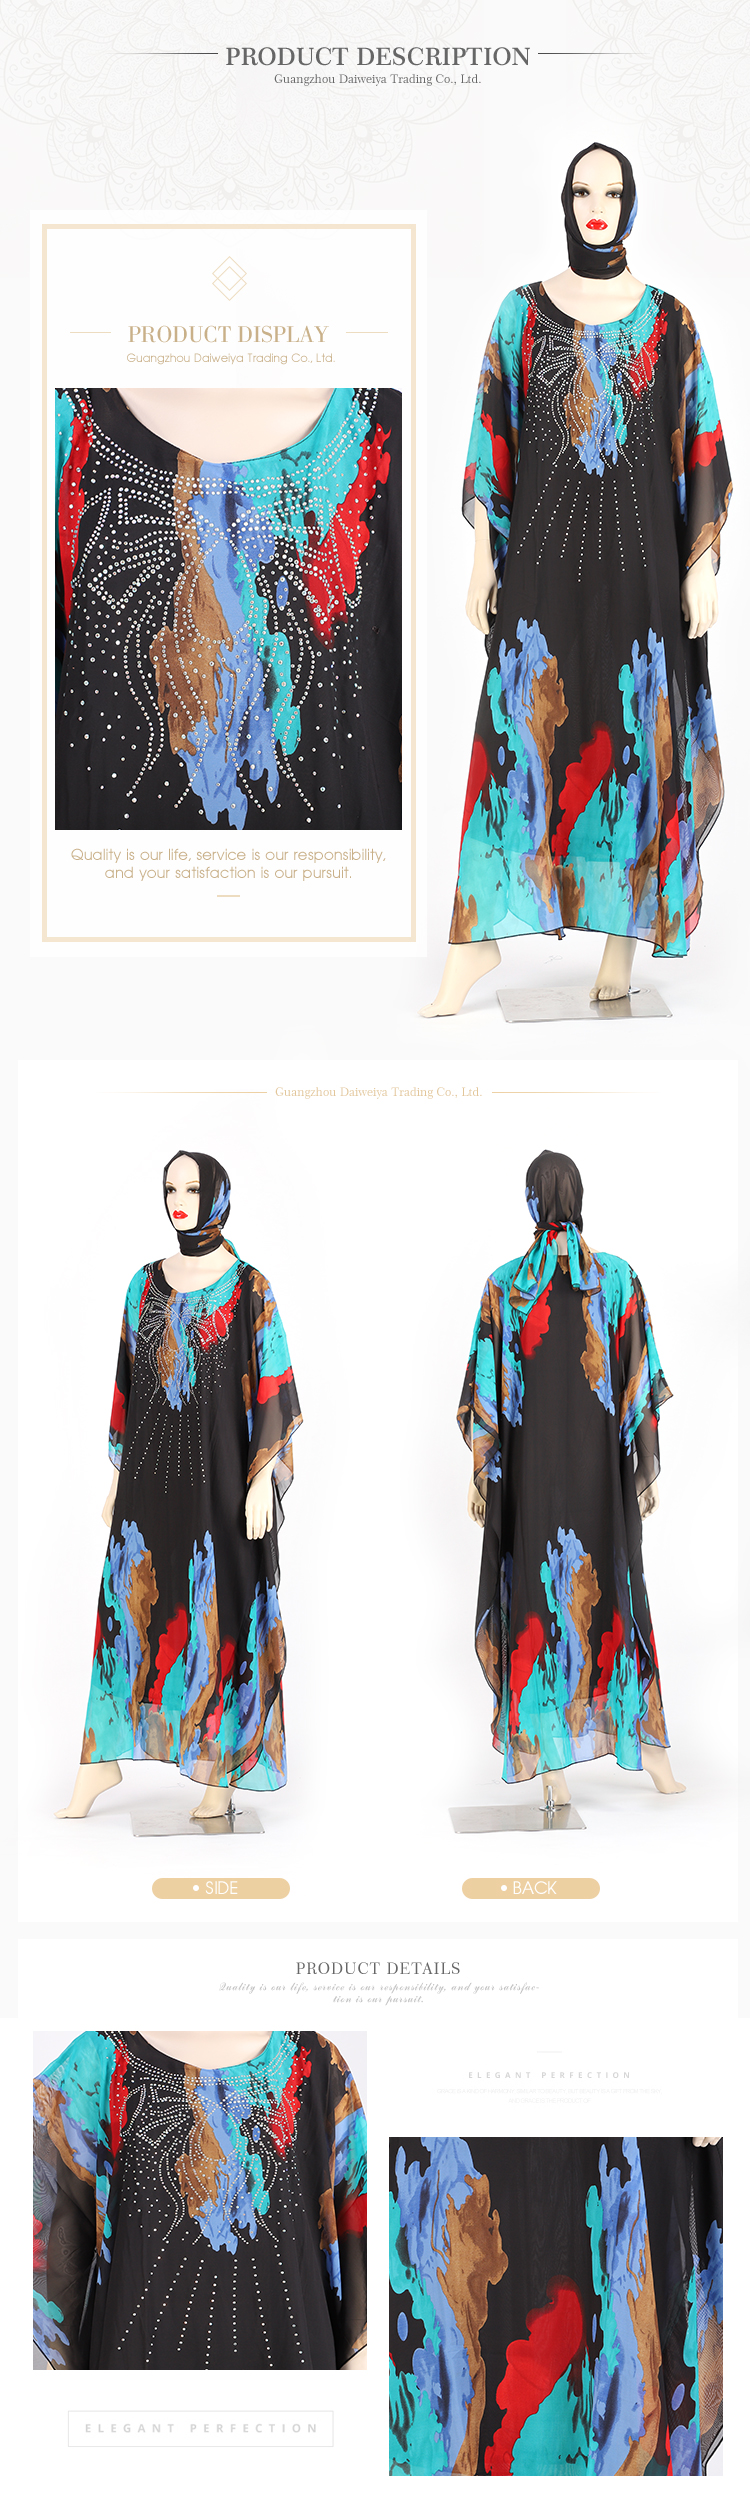 dressing gown abaya long pakistan turkey silk muslim green arab dress kaftan